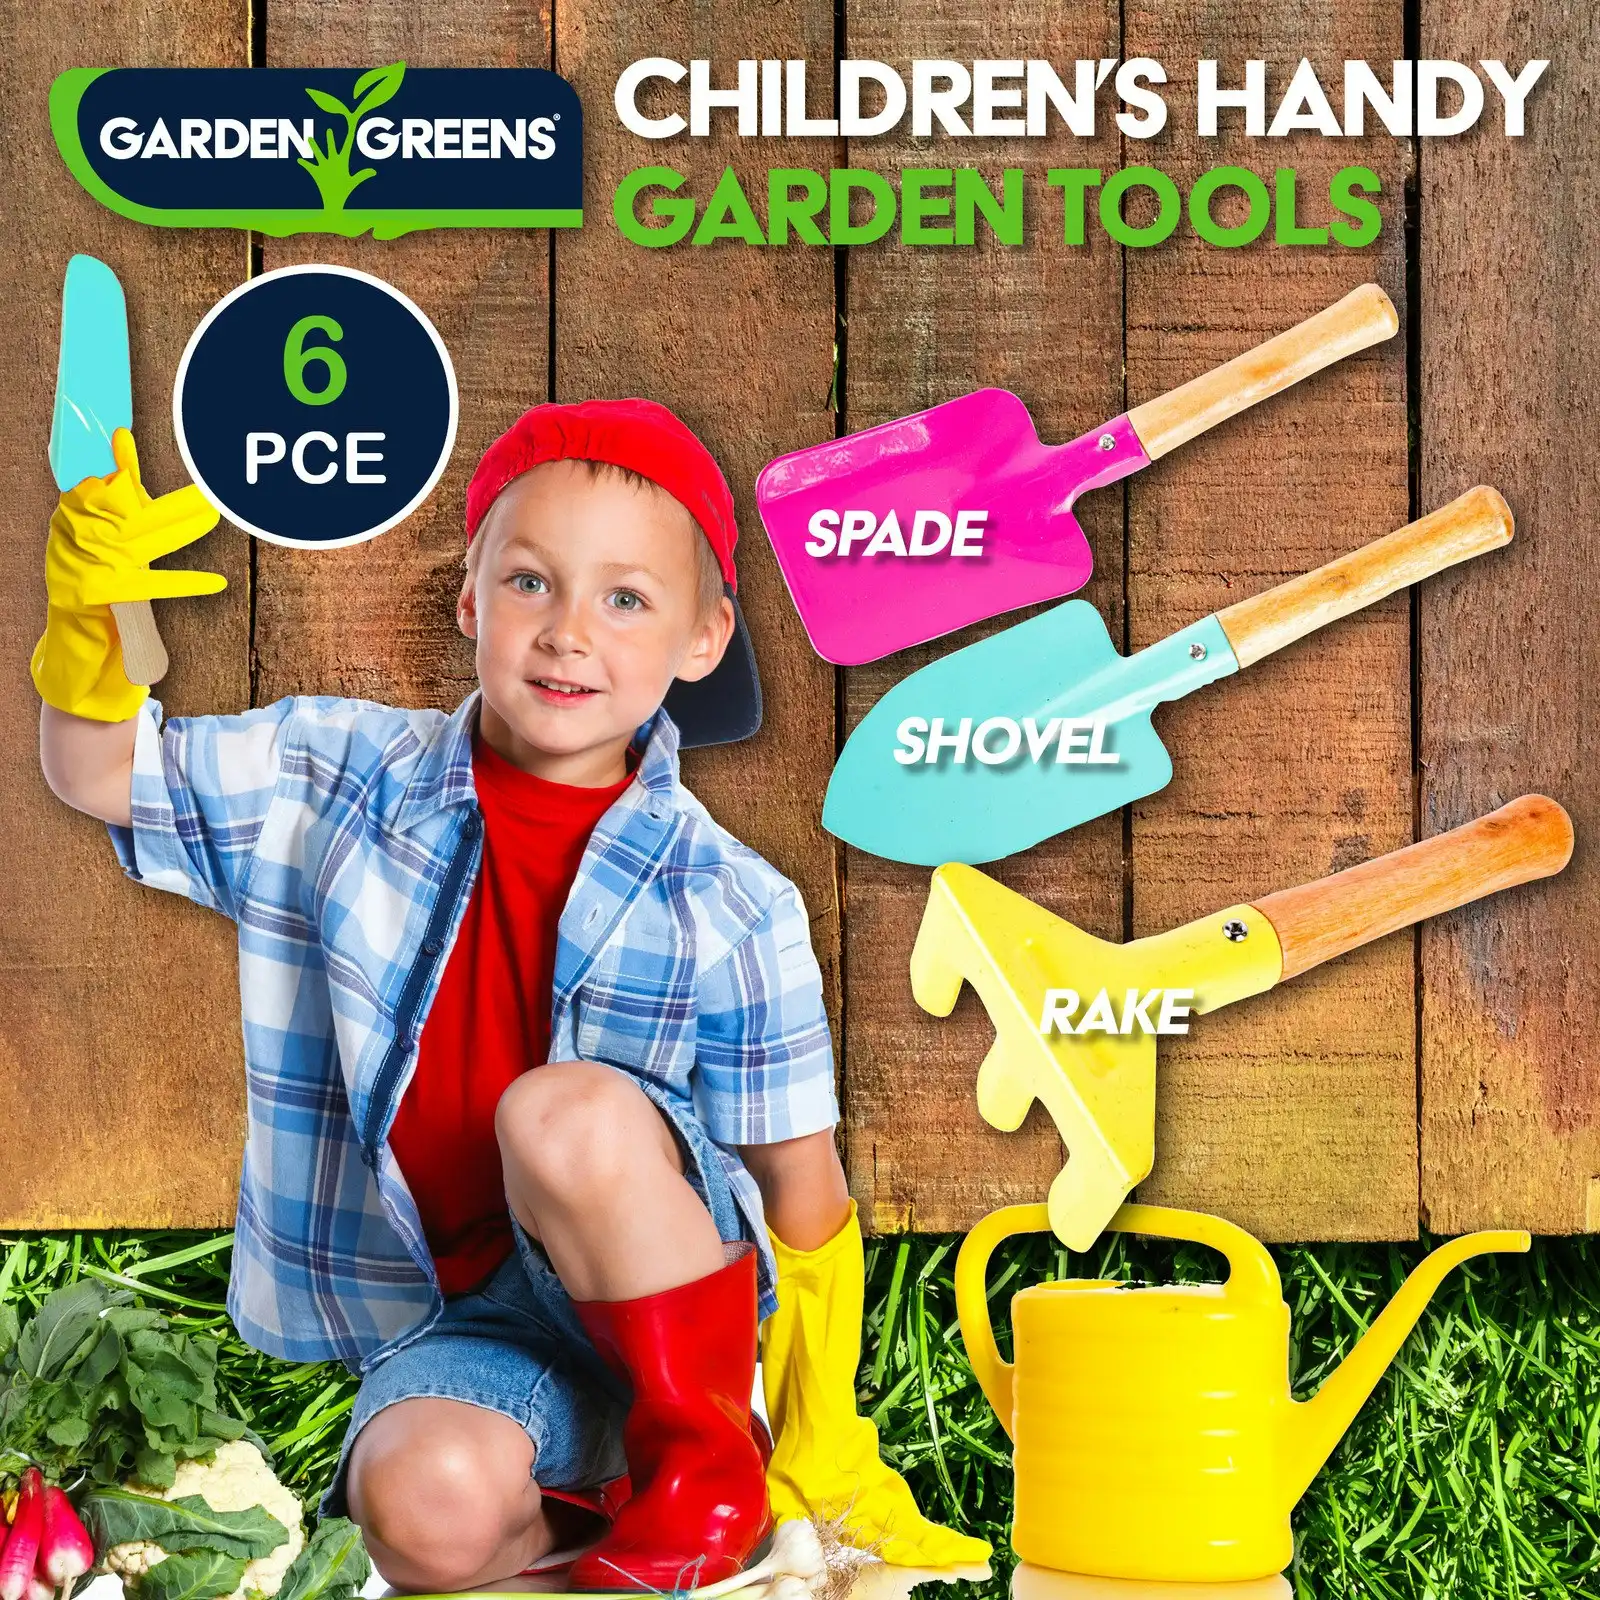 Garden Greens 6PCE Children's Gardening Tool Kit Durable Fun Active Outdoors